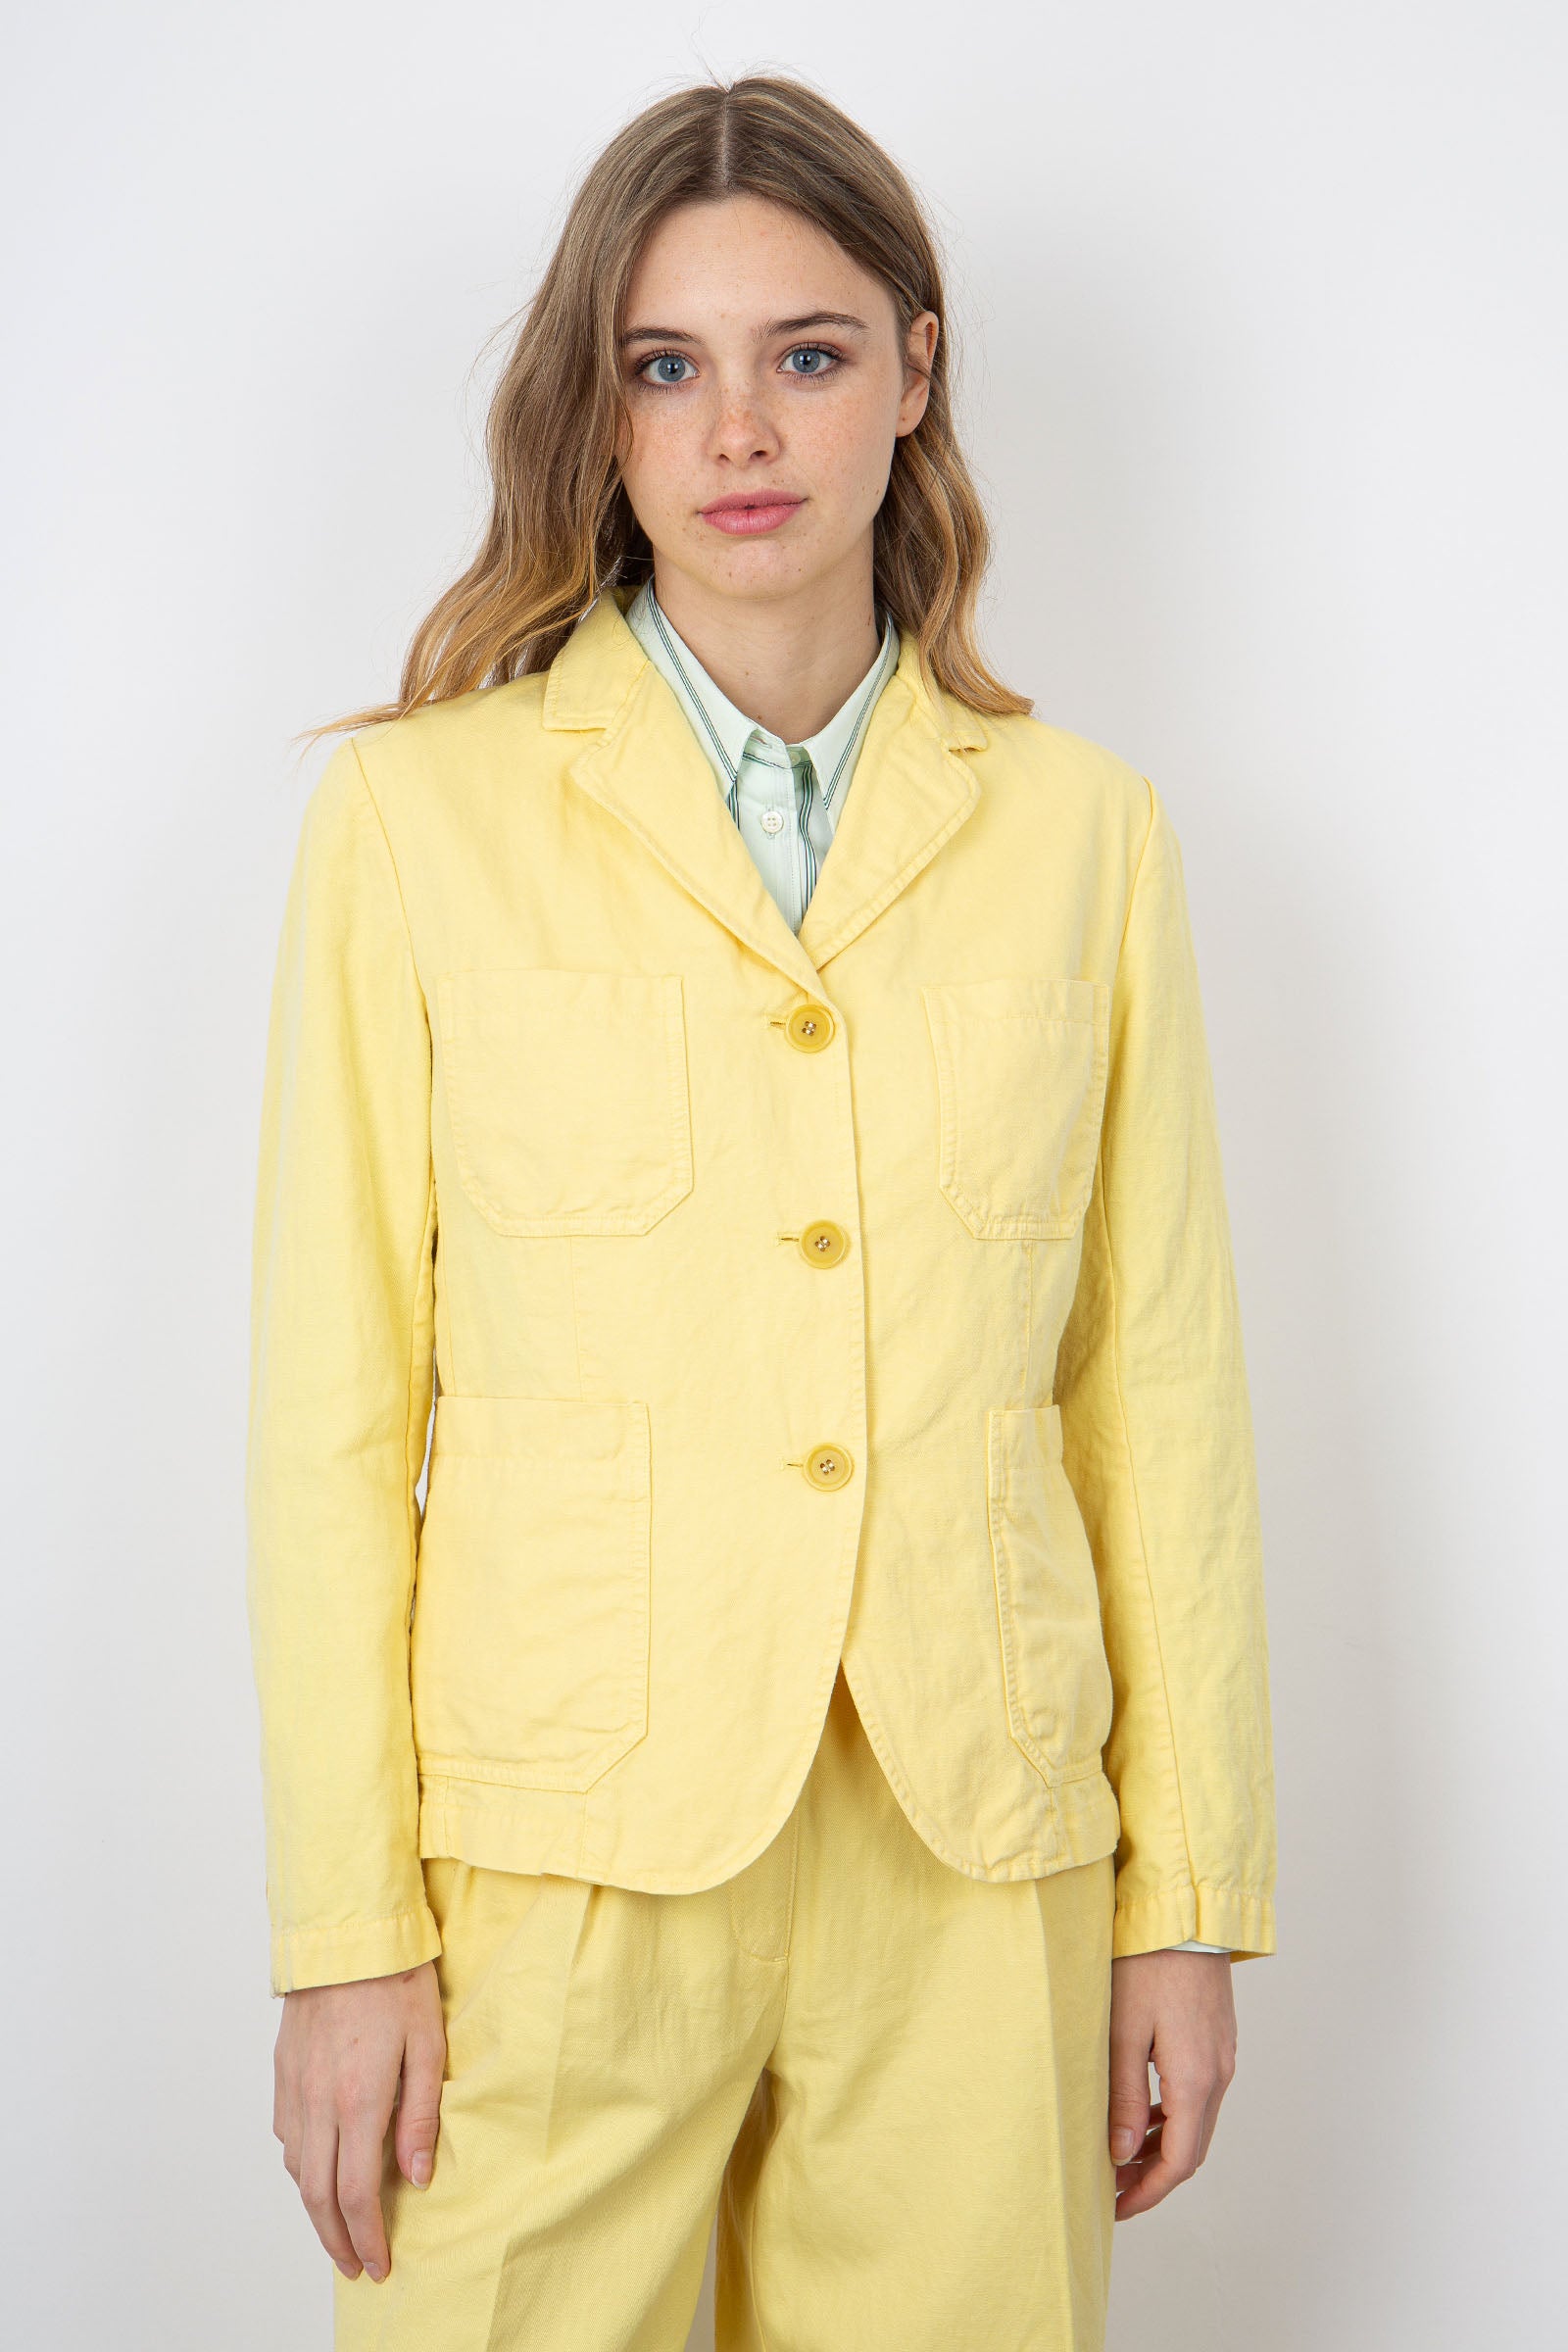 Aspesi Cotton/Linen Yellow Jacket 0930 G20885155 - 3